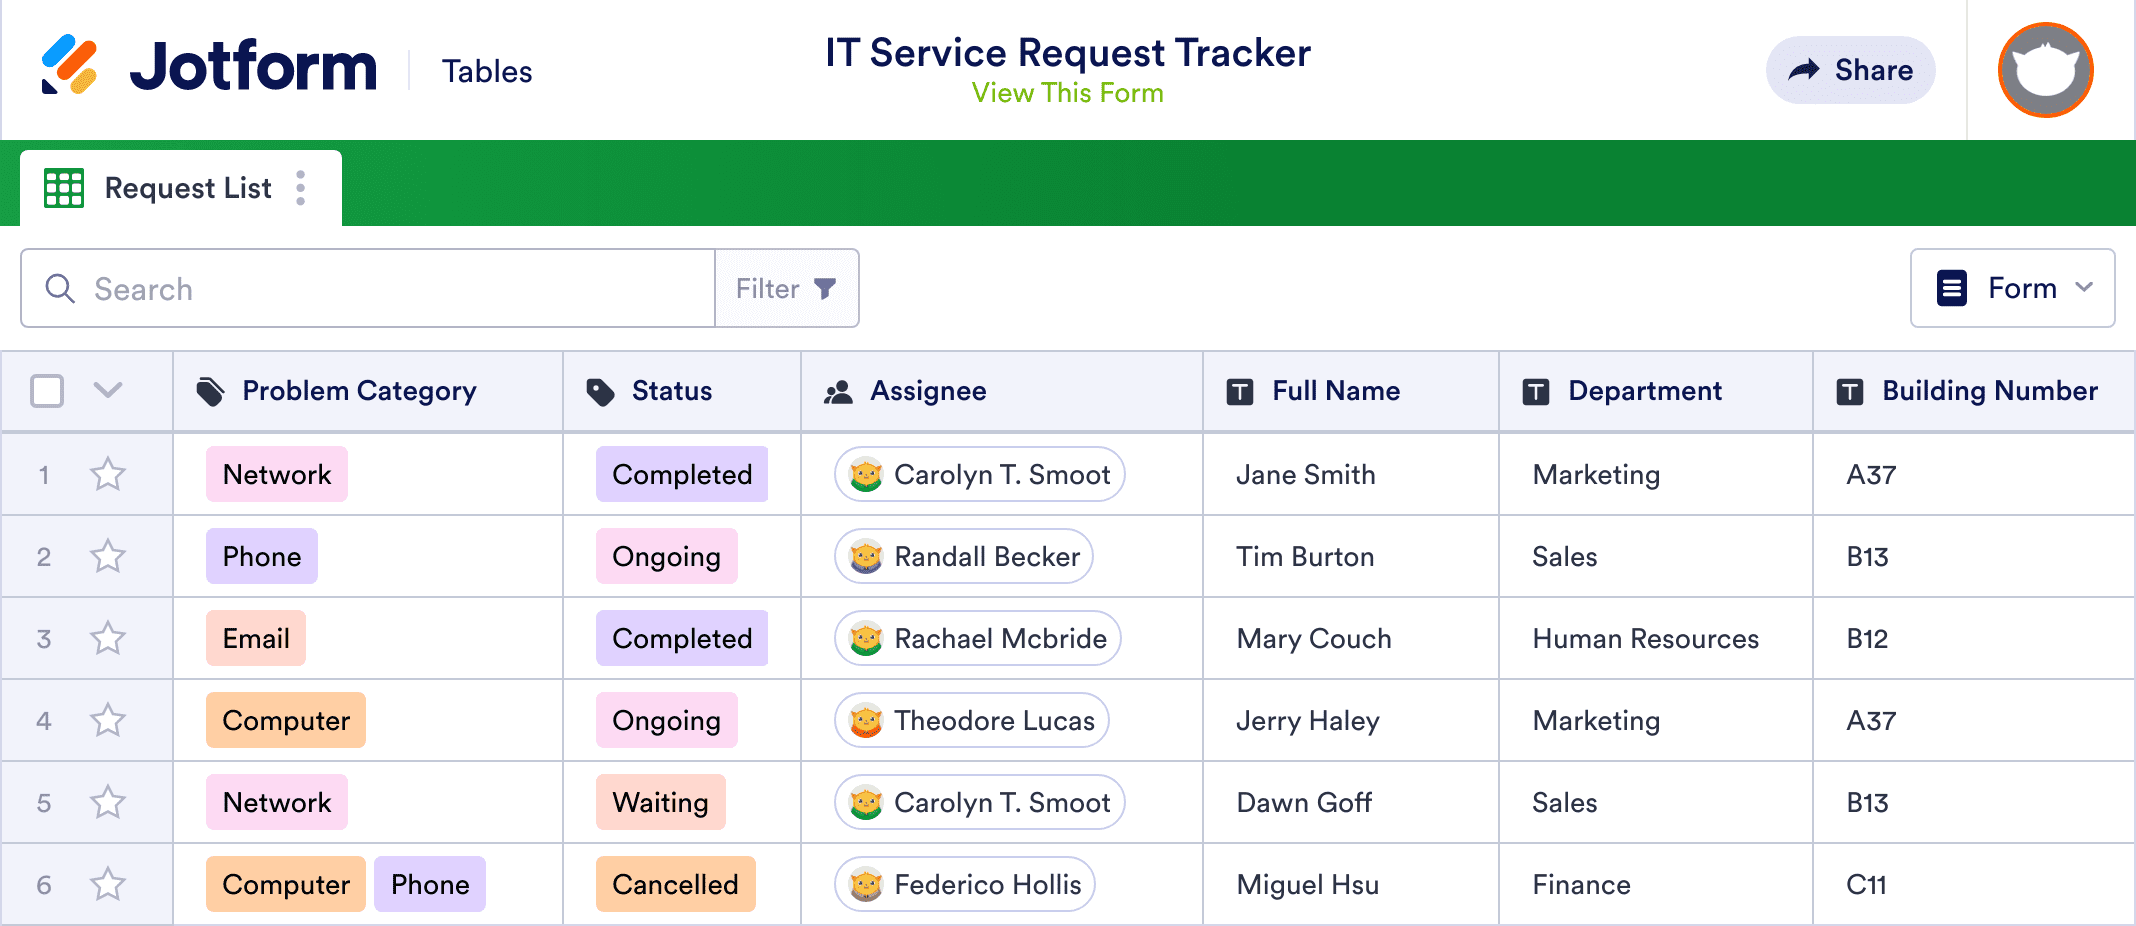 IT Service Request Tracker Template | Jotform Tables